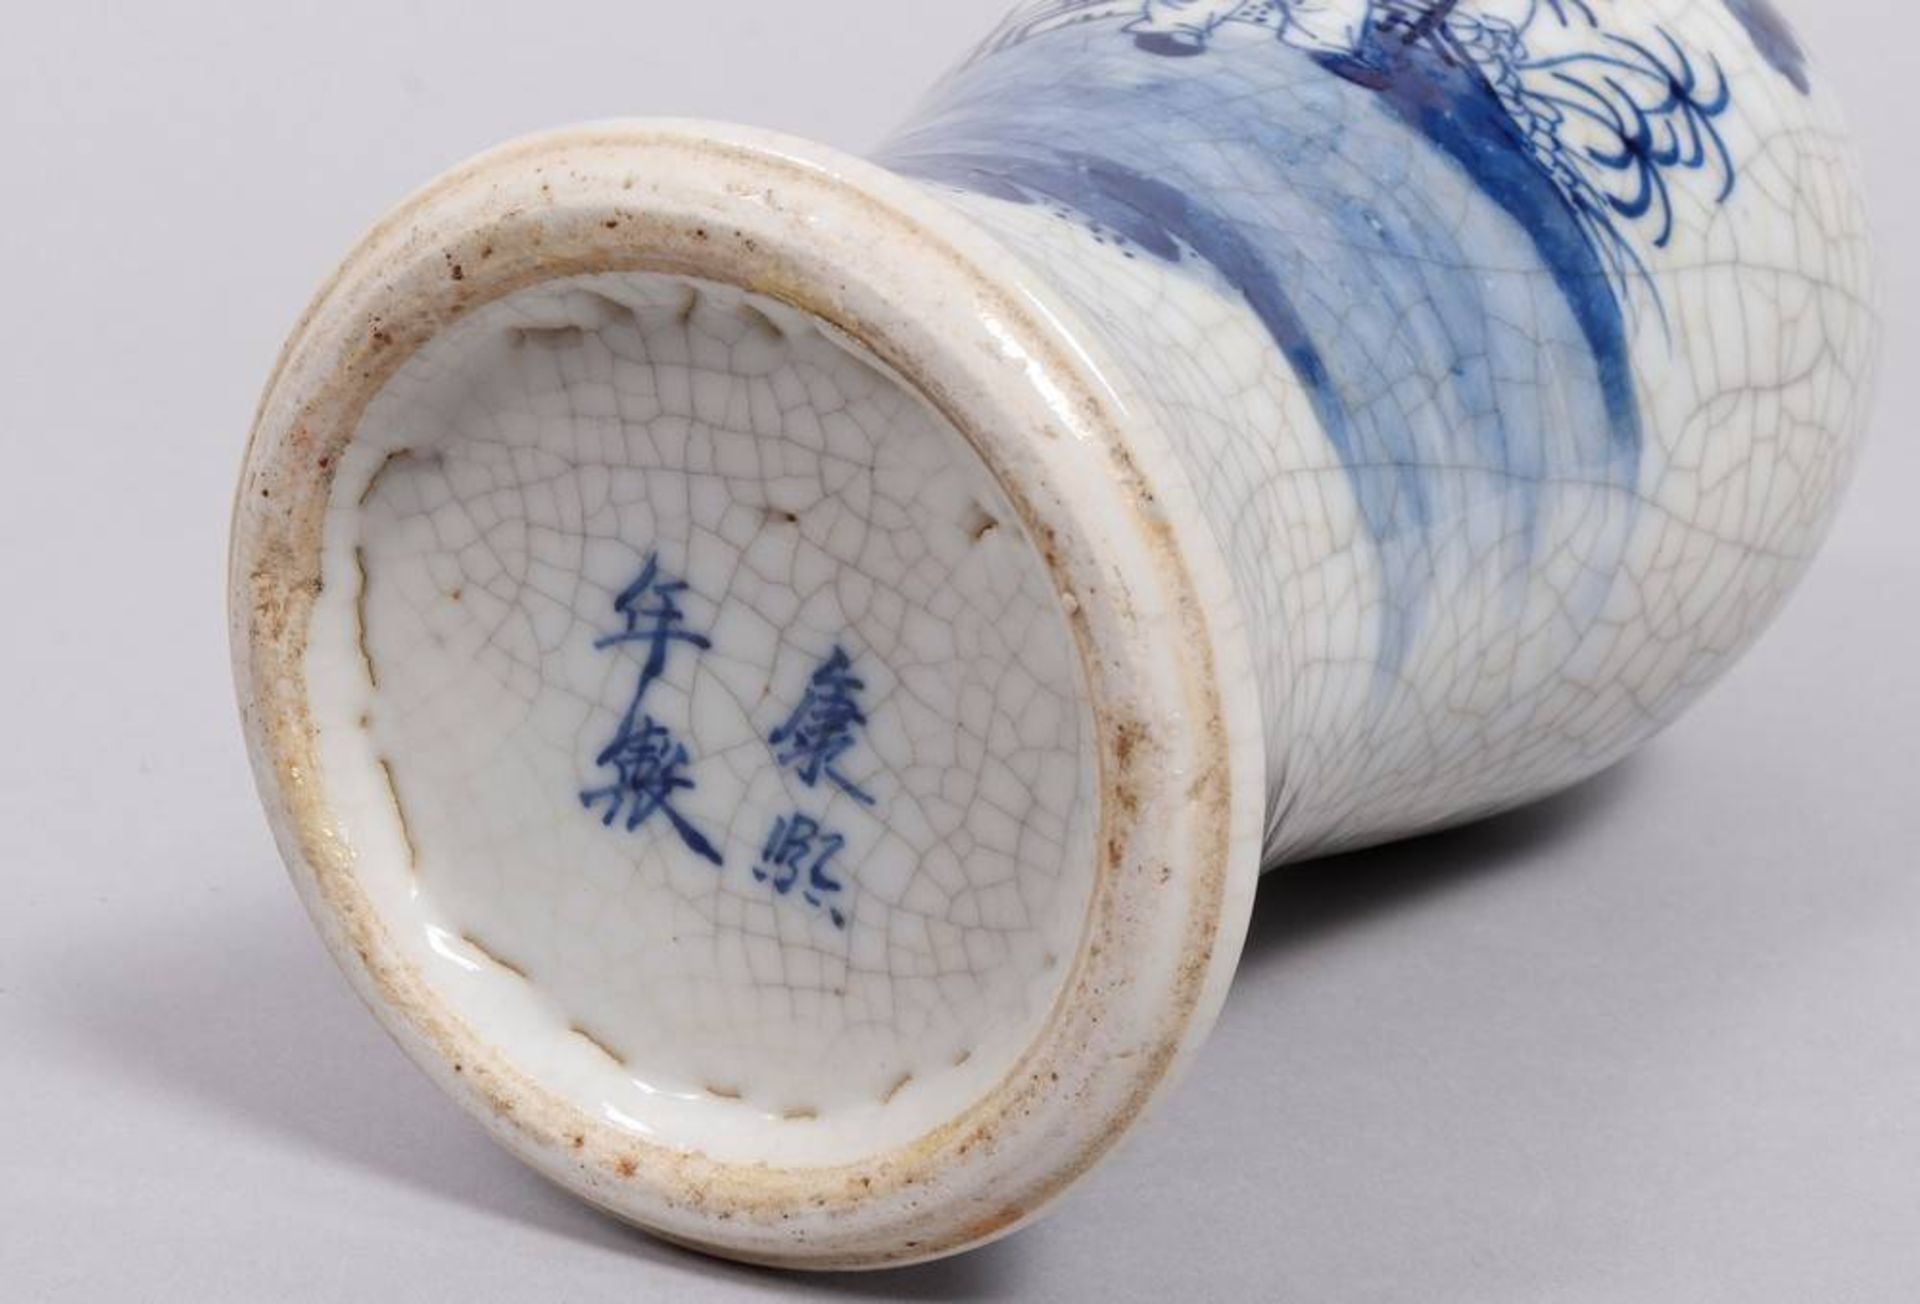 Lidded vase, China, probably Republic period - Image 5 of 5